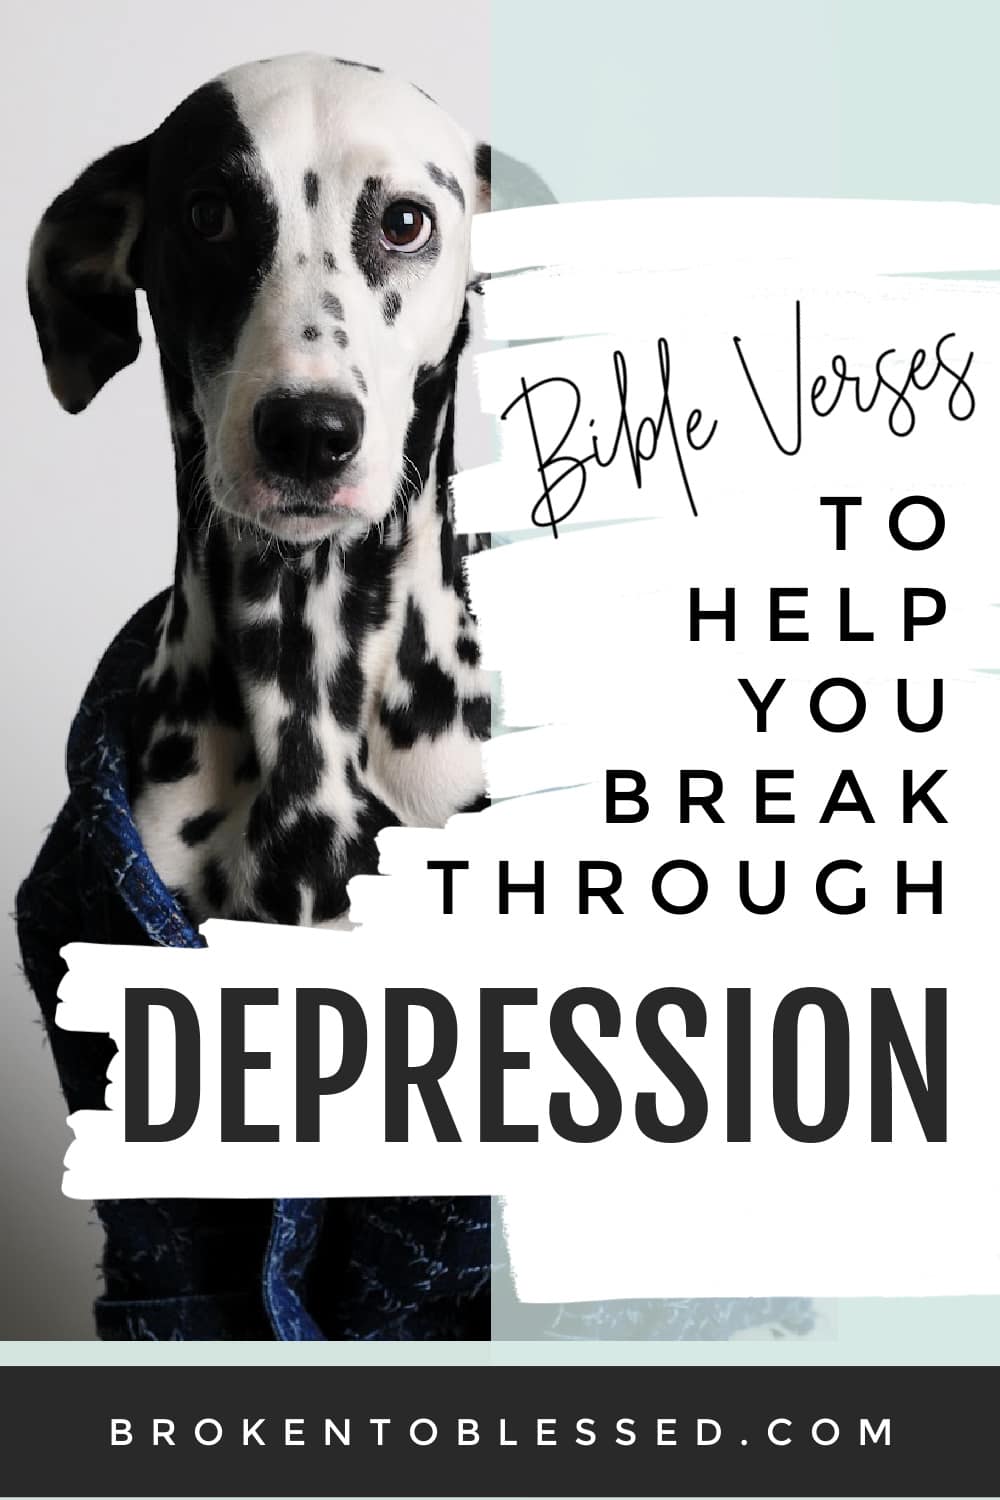 Bible verses to help you breakthrough depression Pinterest image 